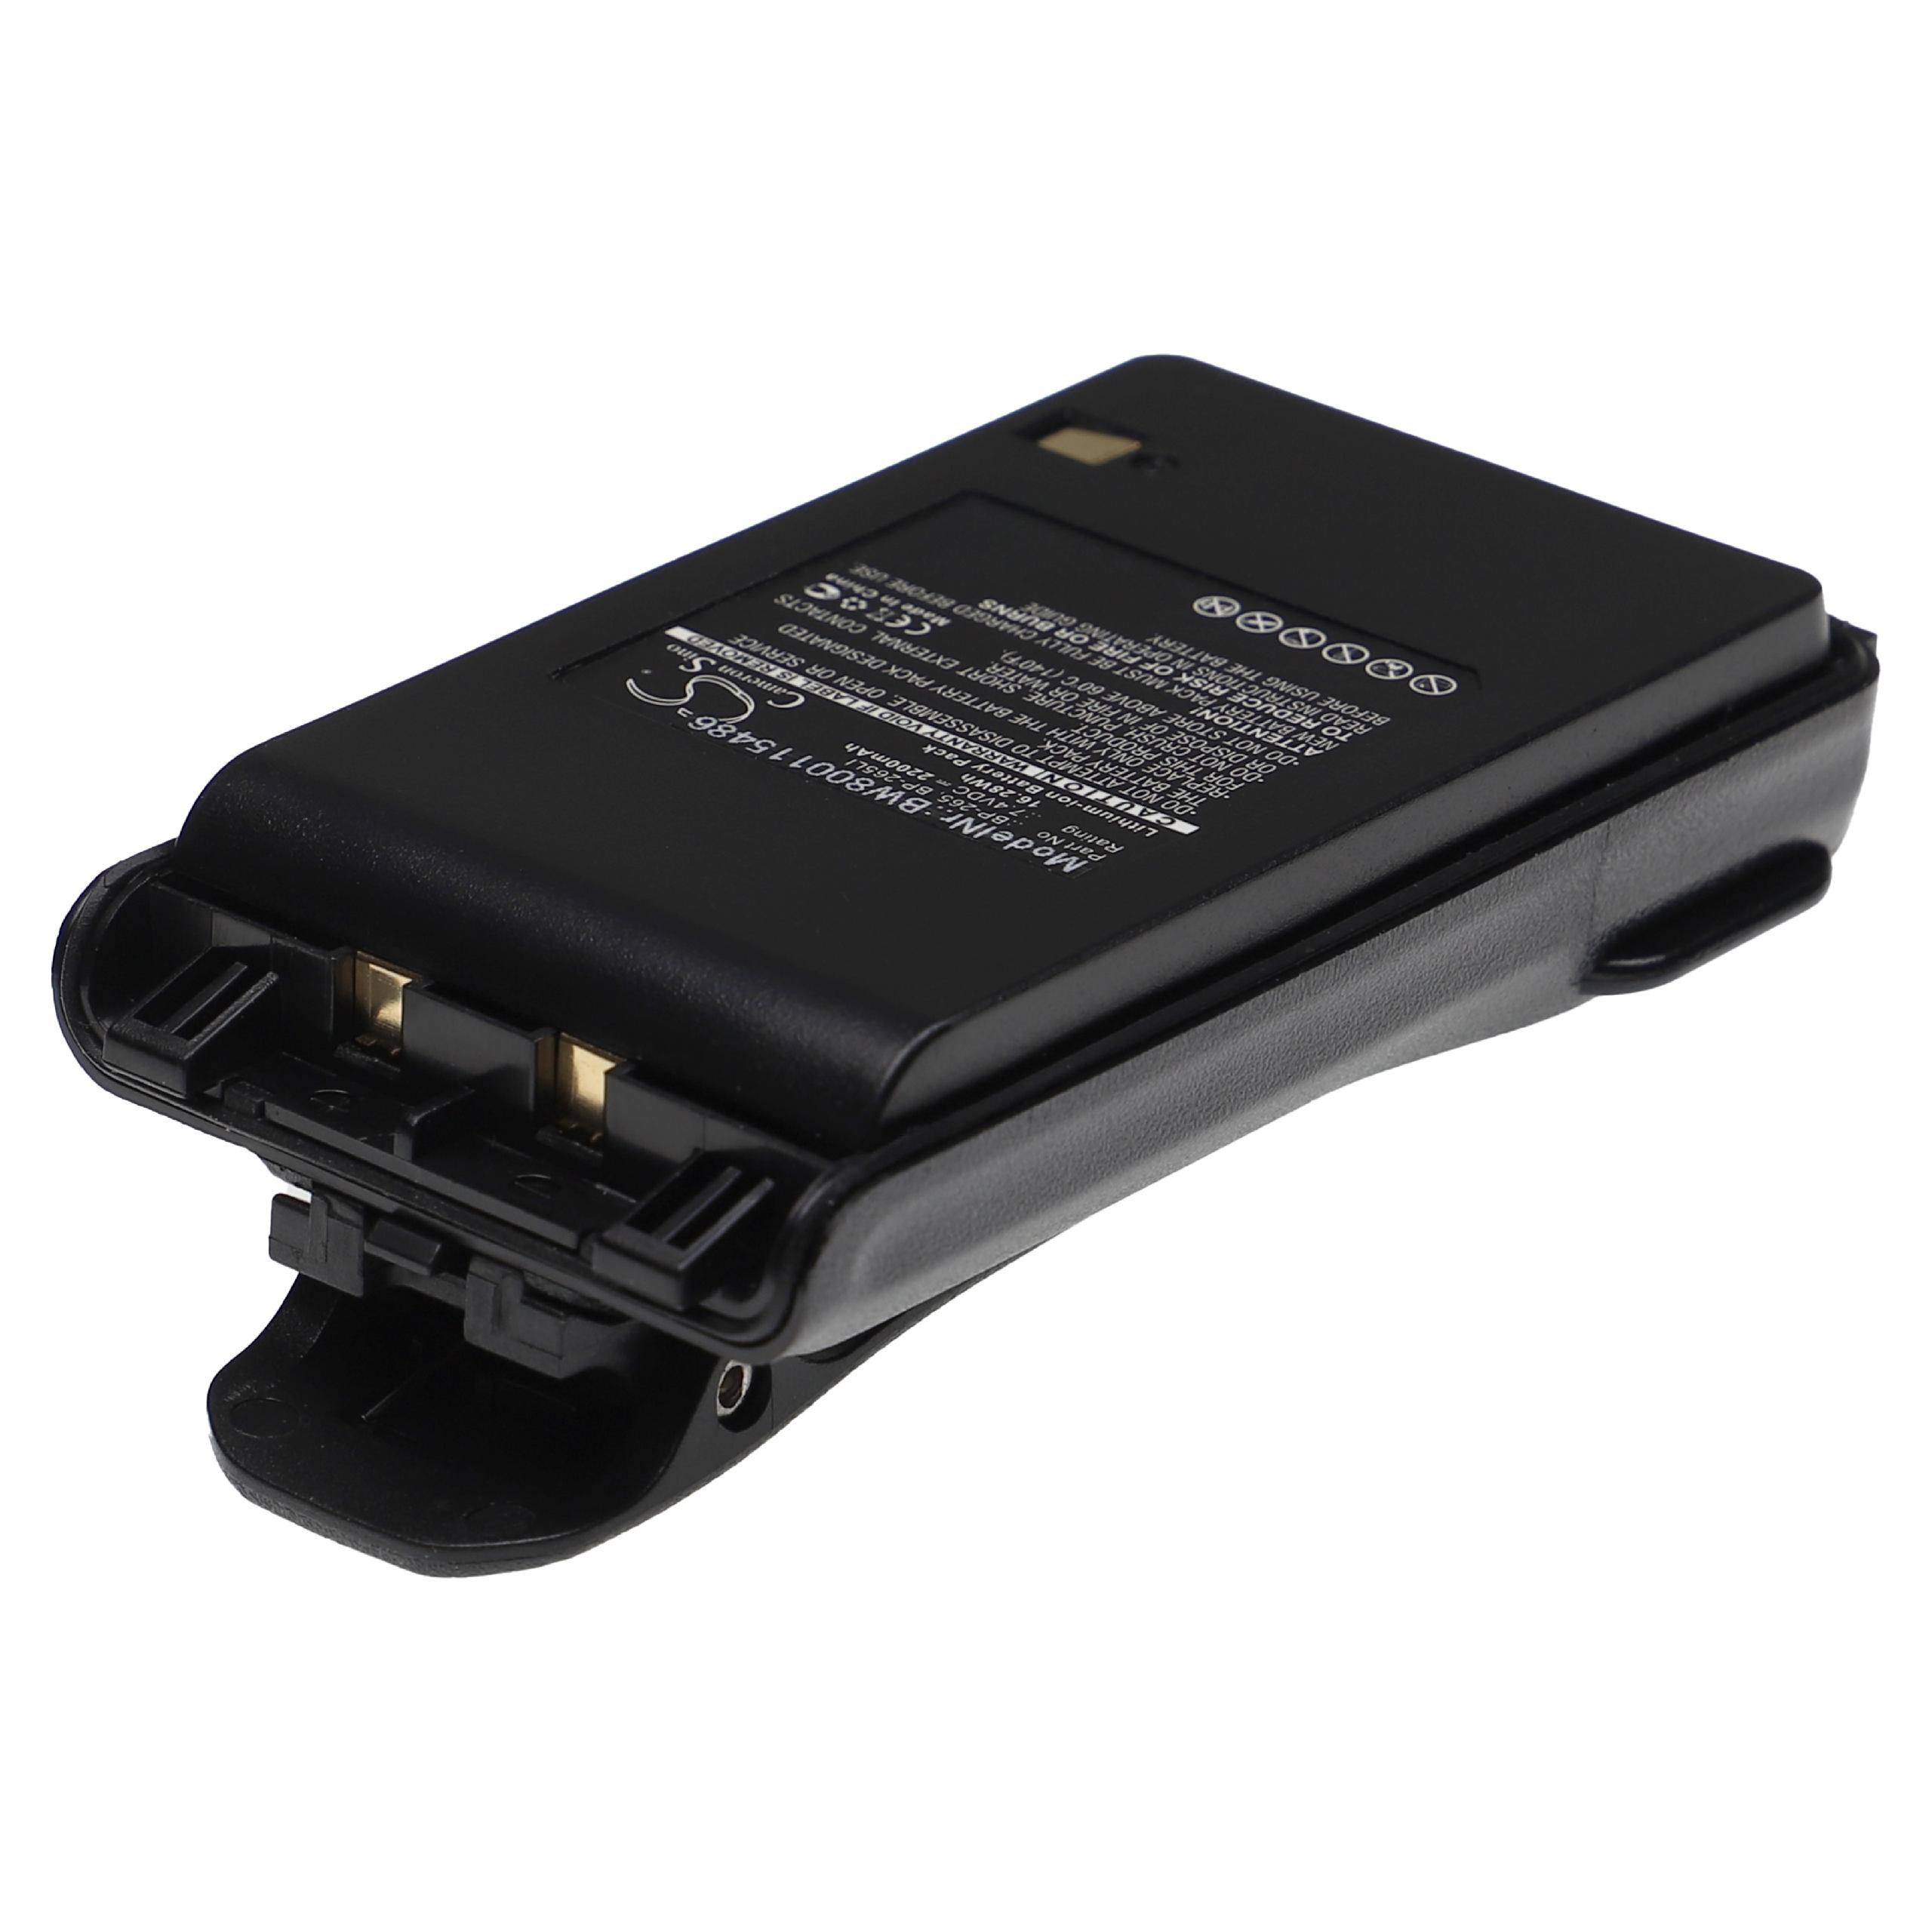 Batería reemplaza Icom BP-265LI, BP-265 para radio, walkie-talkie Icom - 2200 mAh 7,4 V Li-Ion con clip